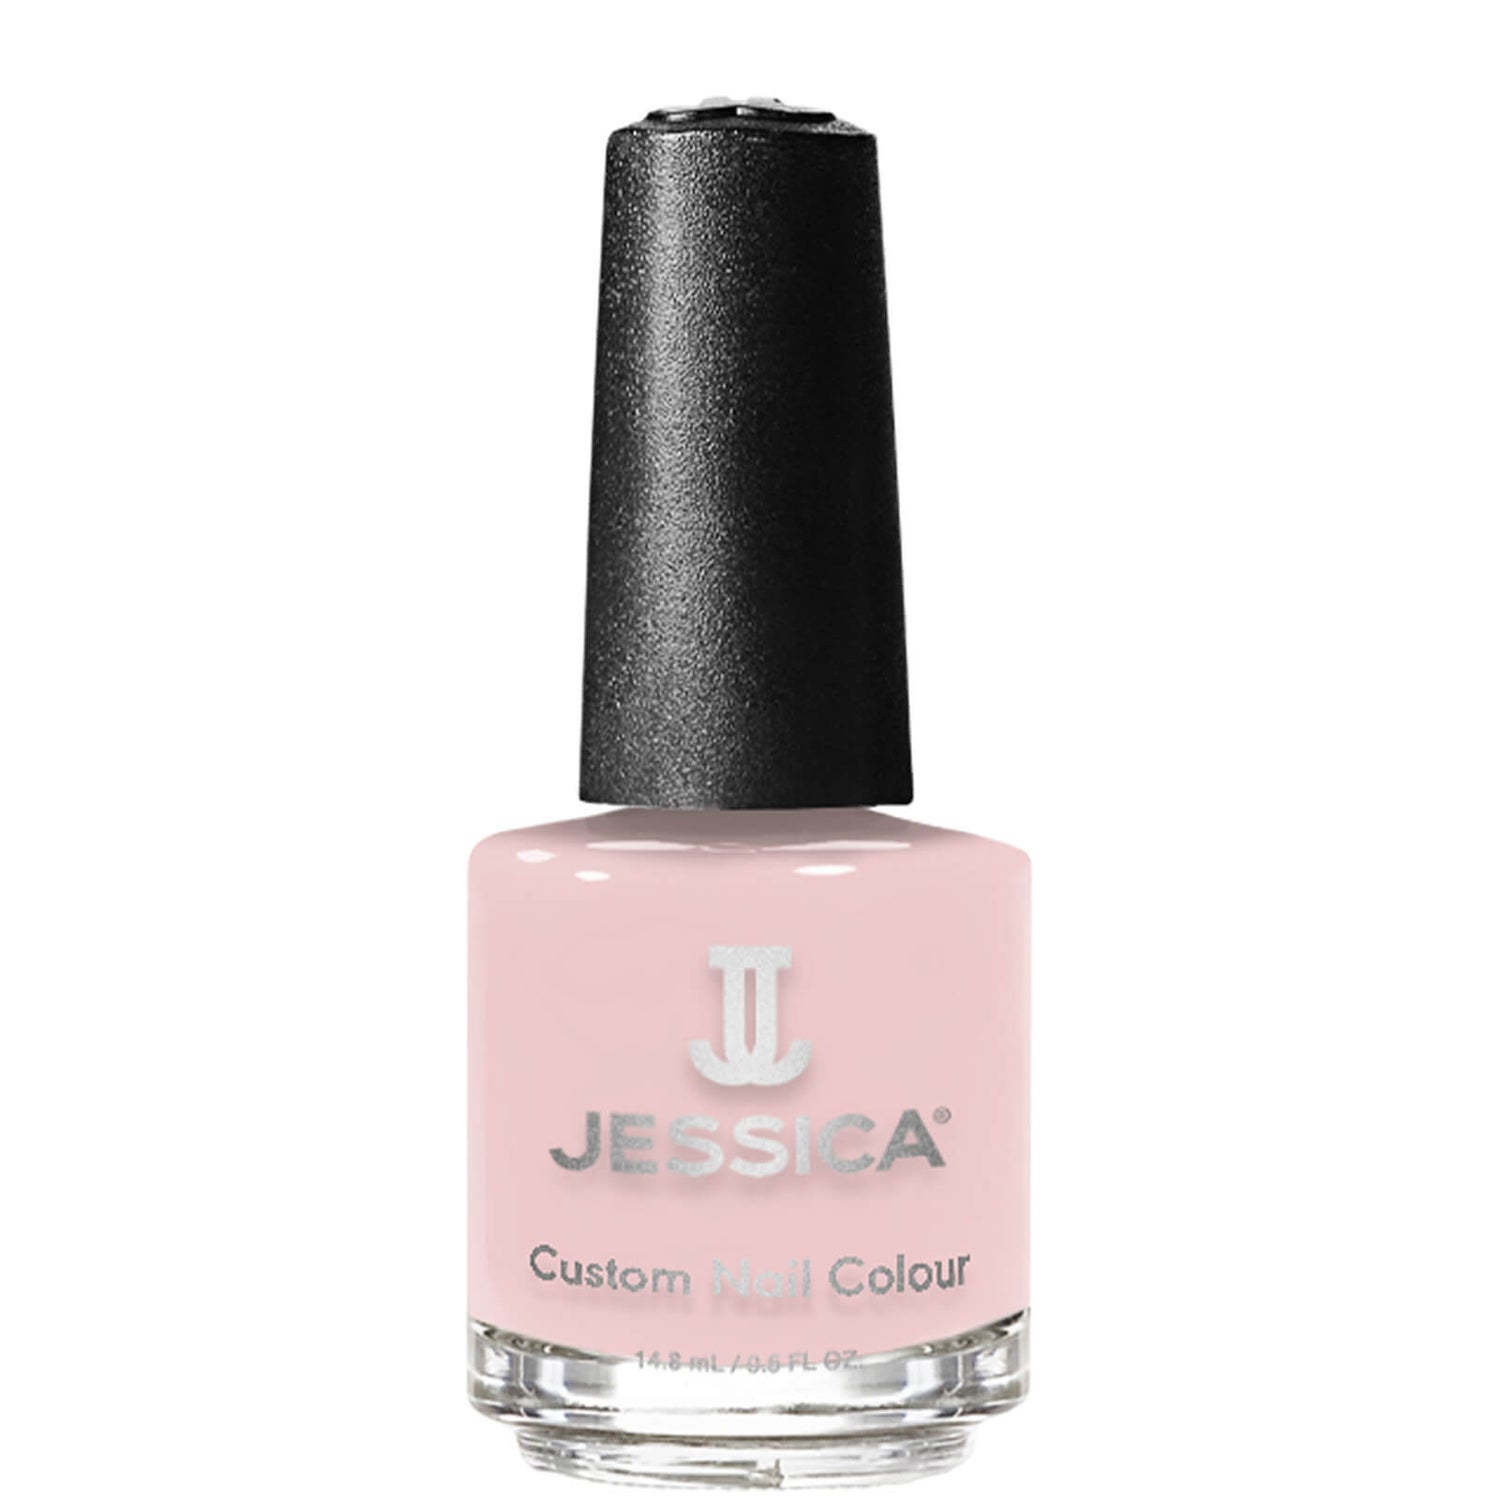 Jessica Custom Colour Nagellack 14.8ml (Verschiedene Farbtöne)